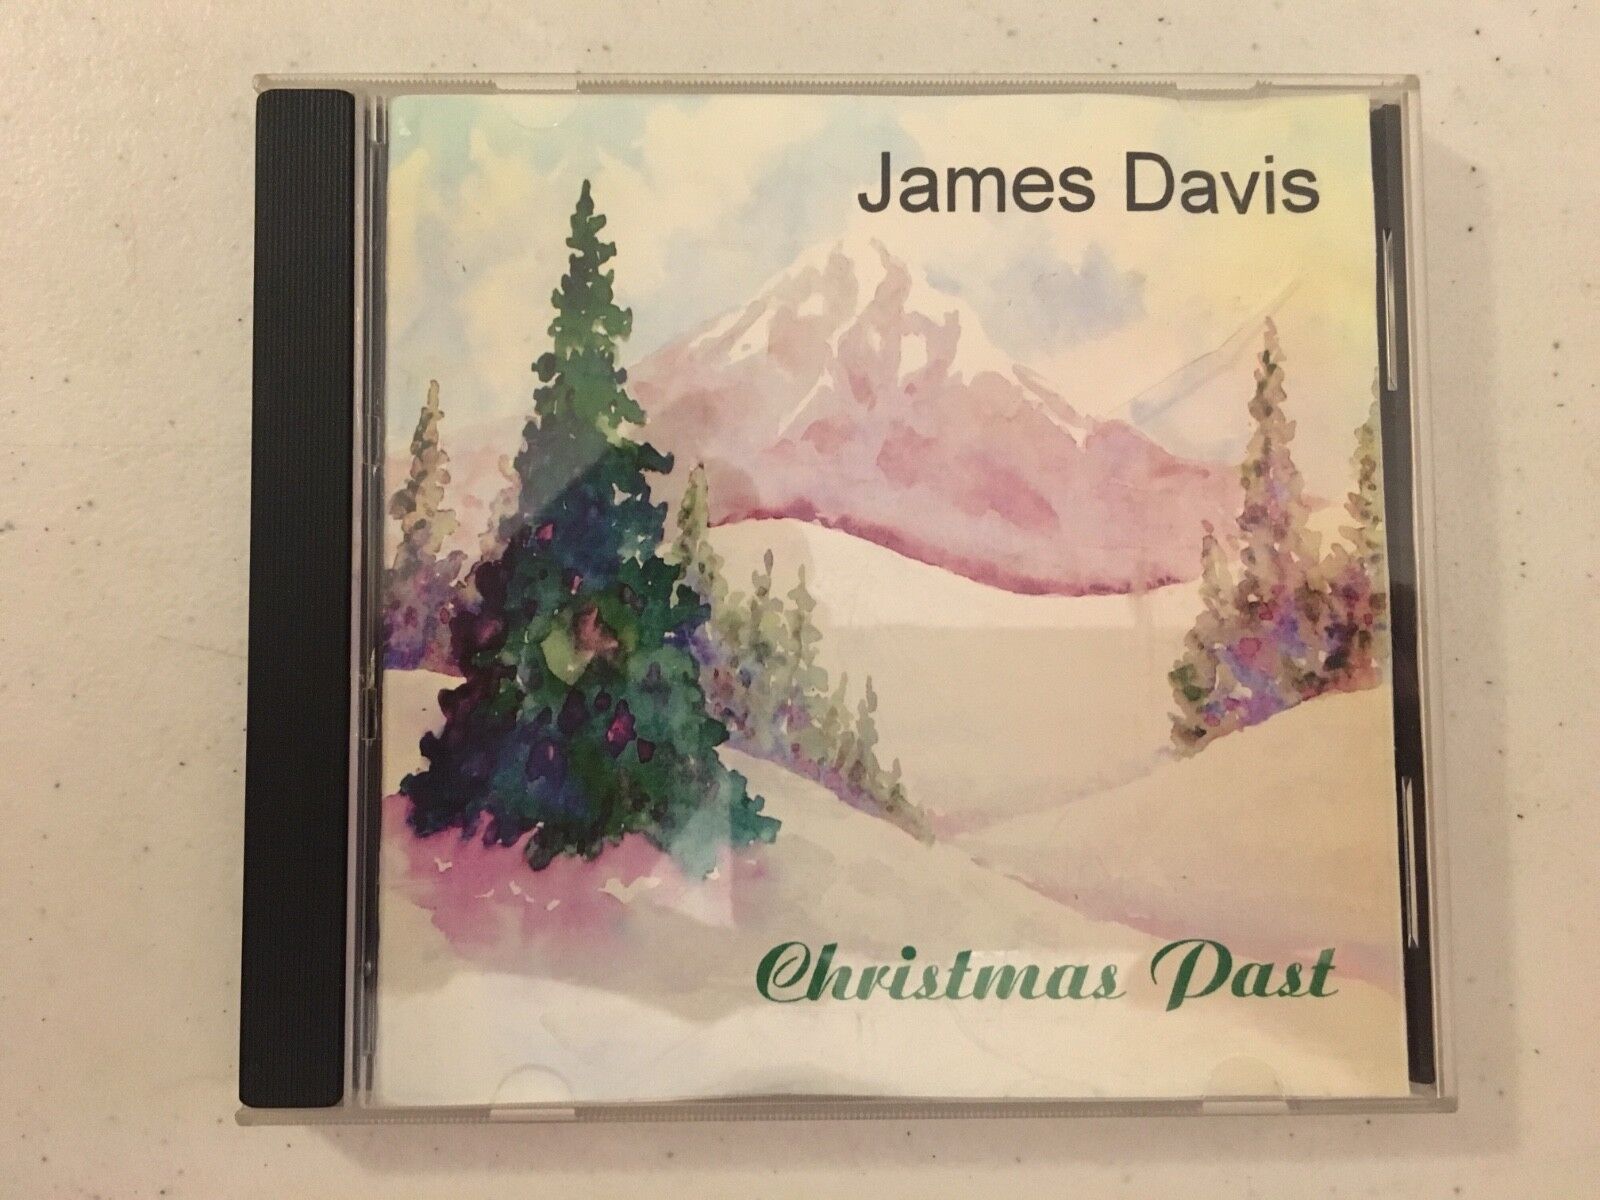 James Davis Christmas Past CD Album private press